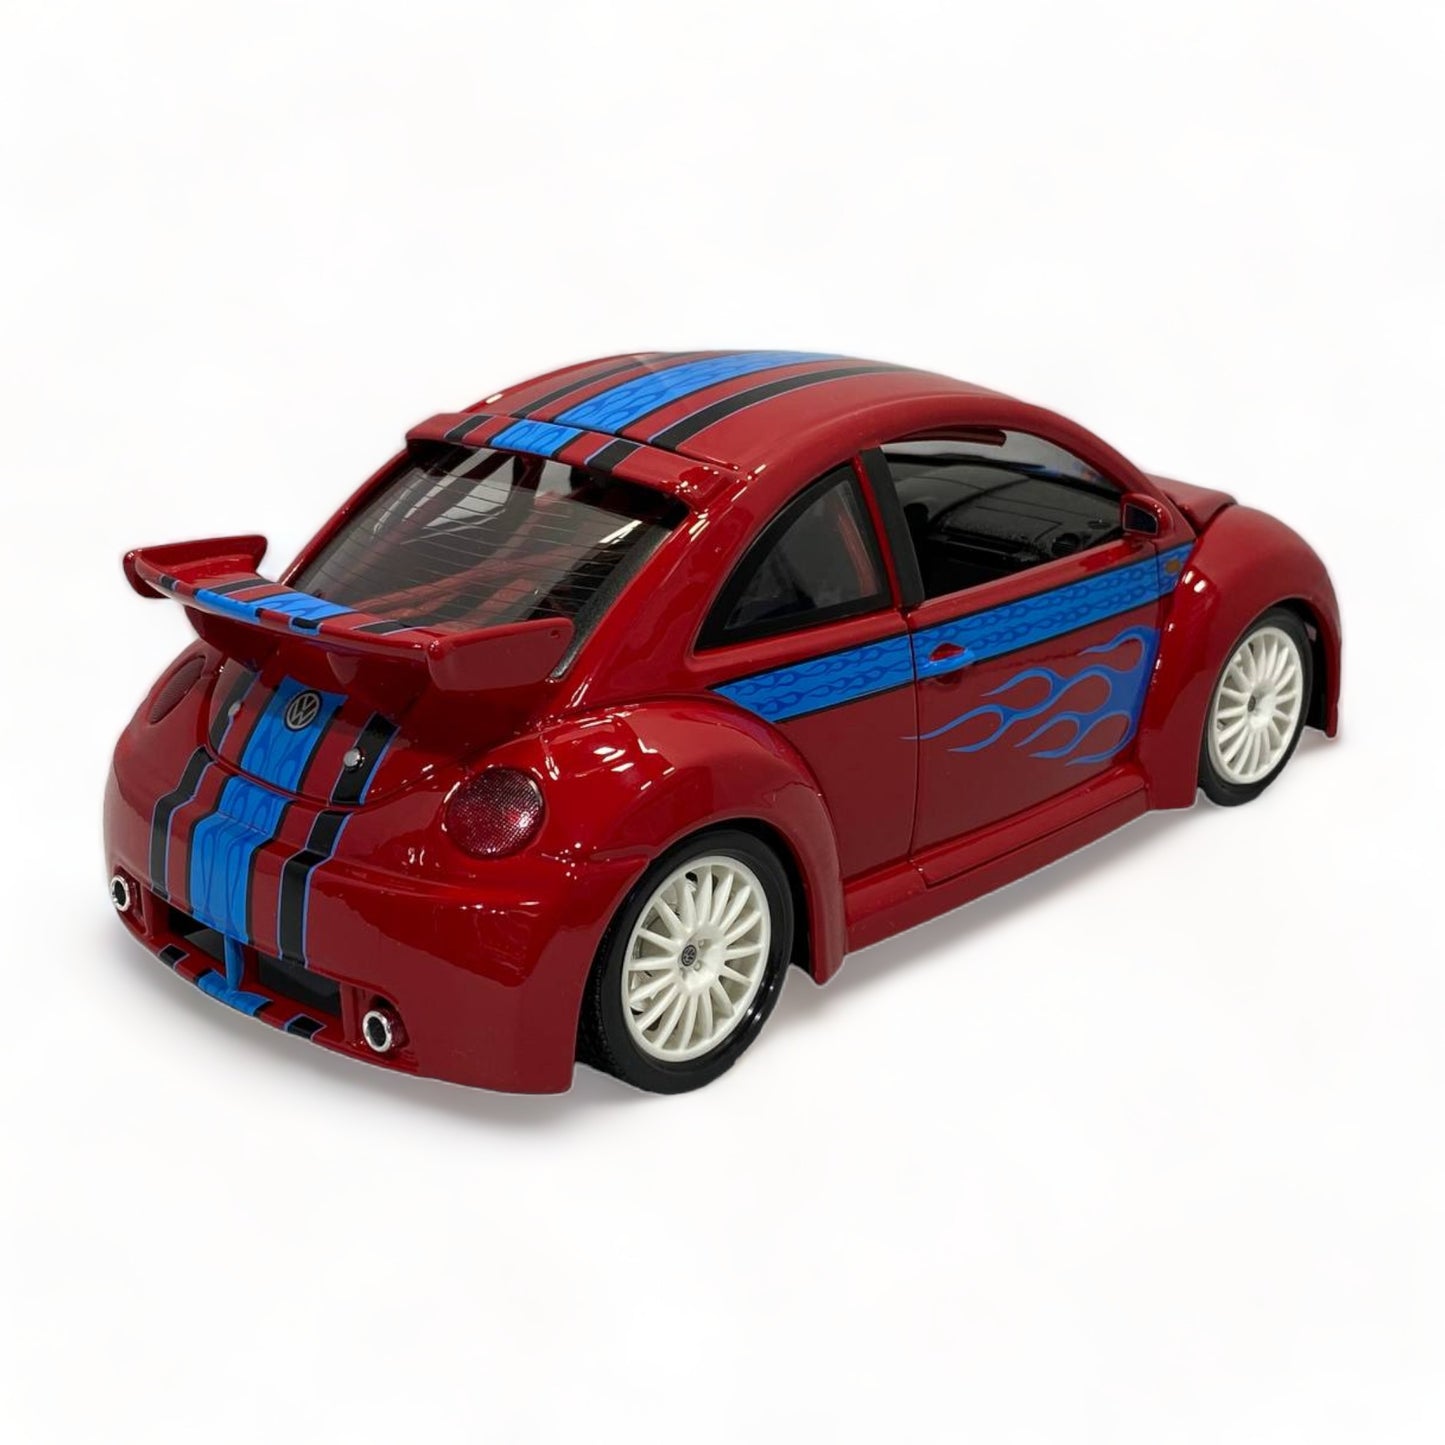 1/8 Diecast Volkswagen New Beetle Cup Red Bburago Scale Model Car|Sold in Dturman.com Dubai UAE.